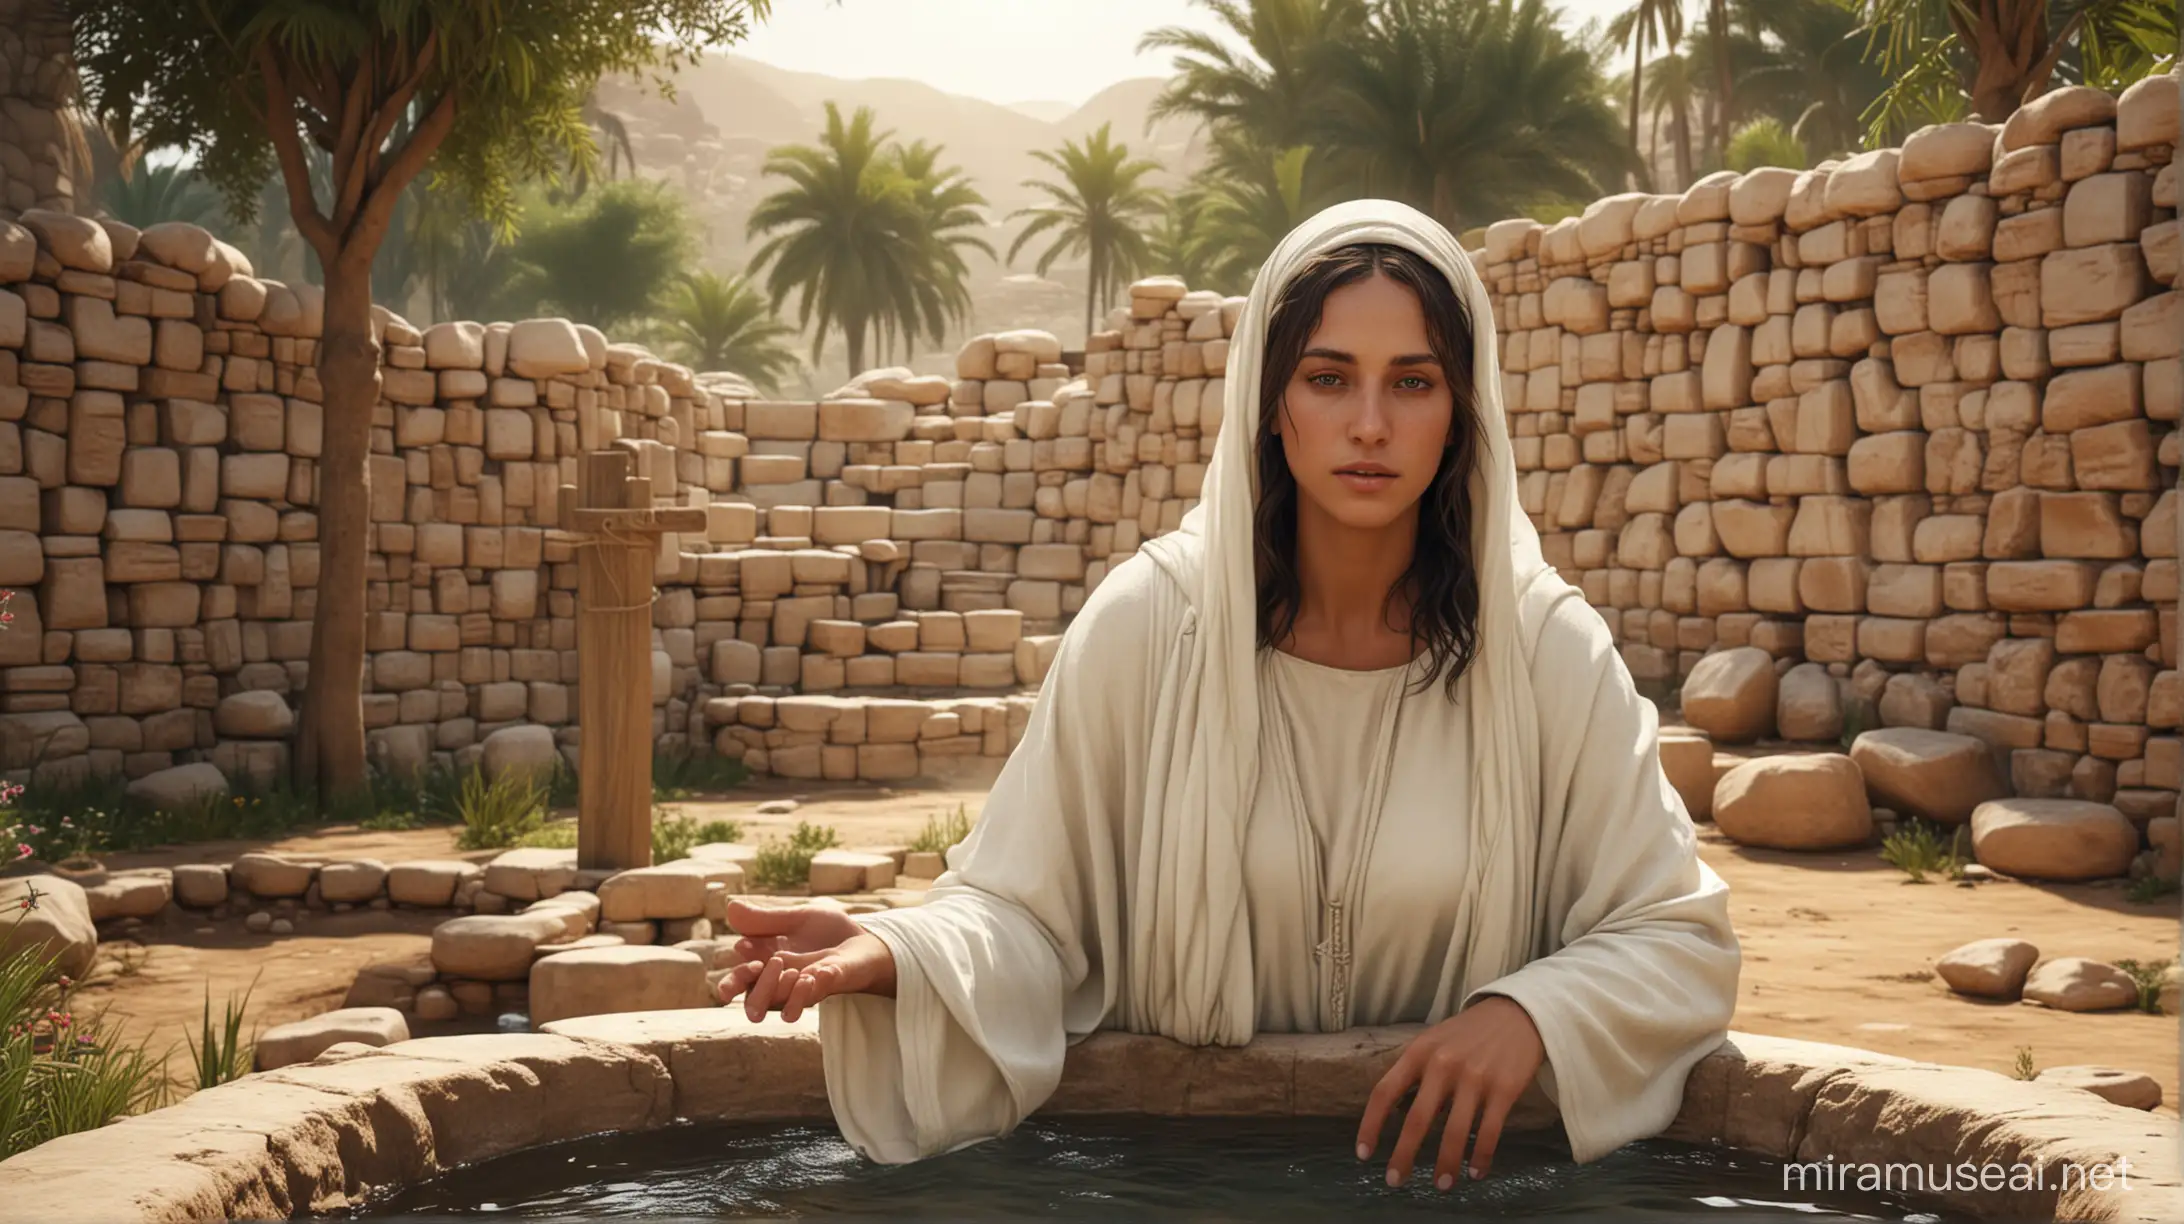 Biblical Scene Samaritan Woman at the Well with Jesus